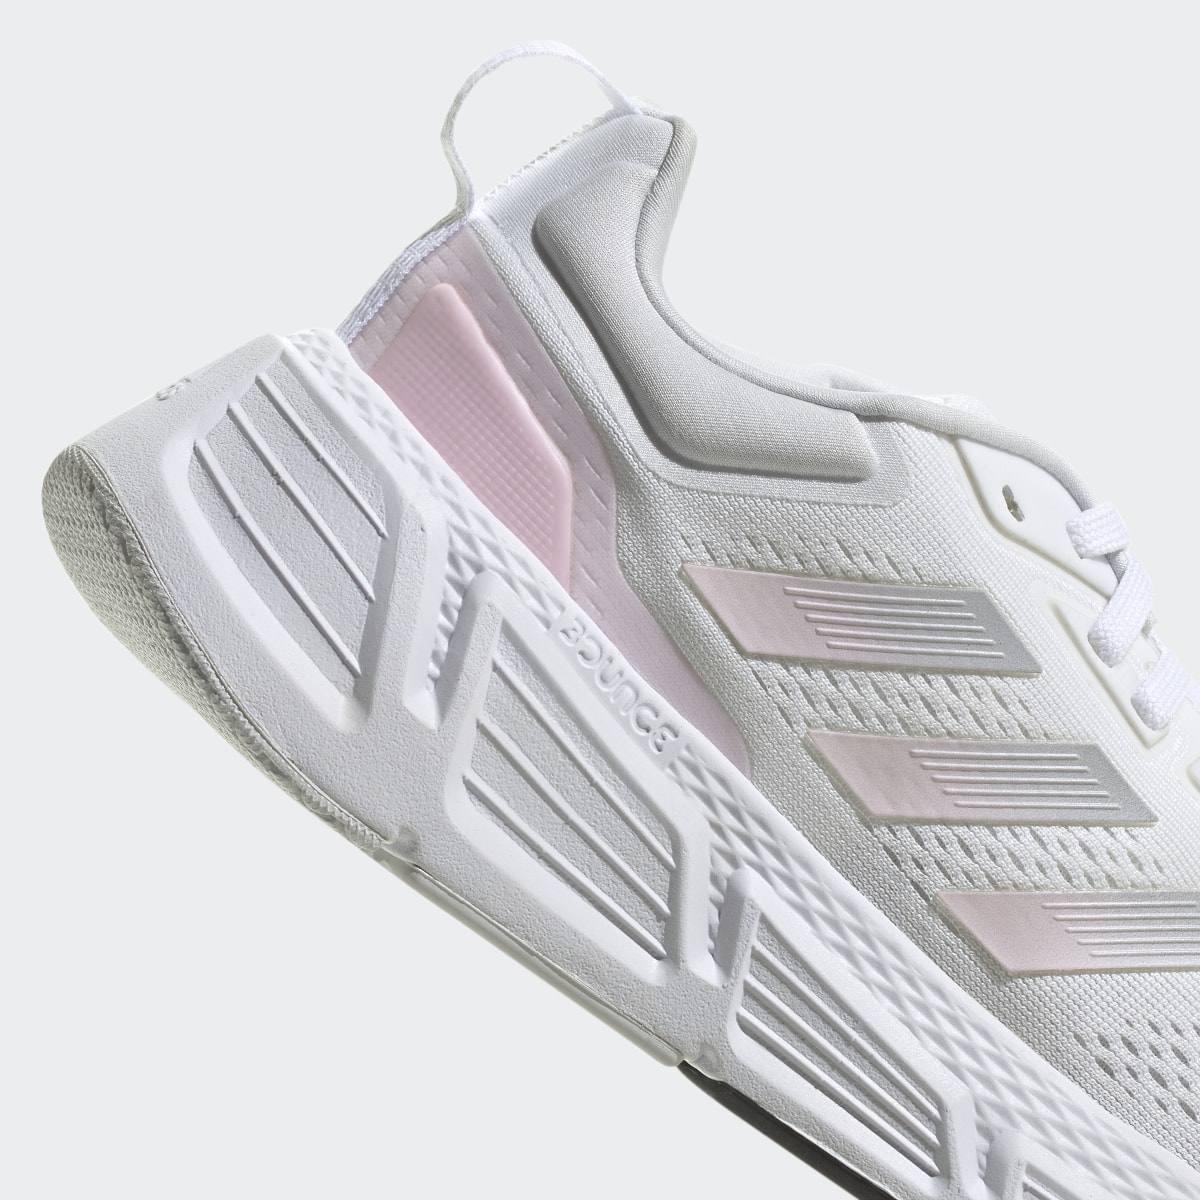 Adidas Questar Schuh. 9